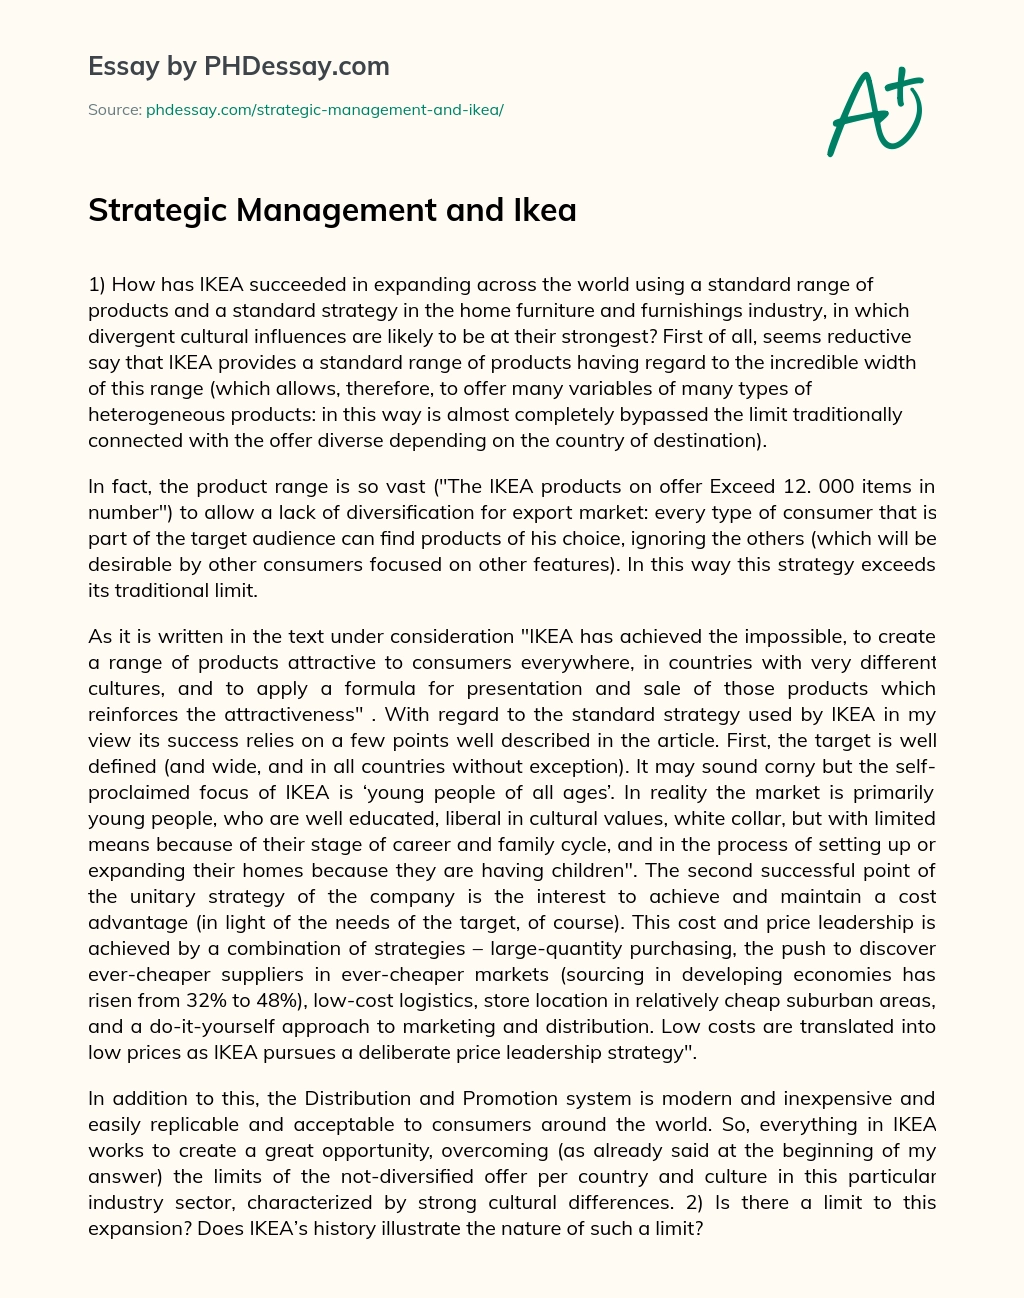 Strategic Management and Ikea essay